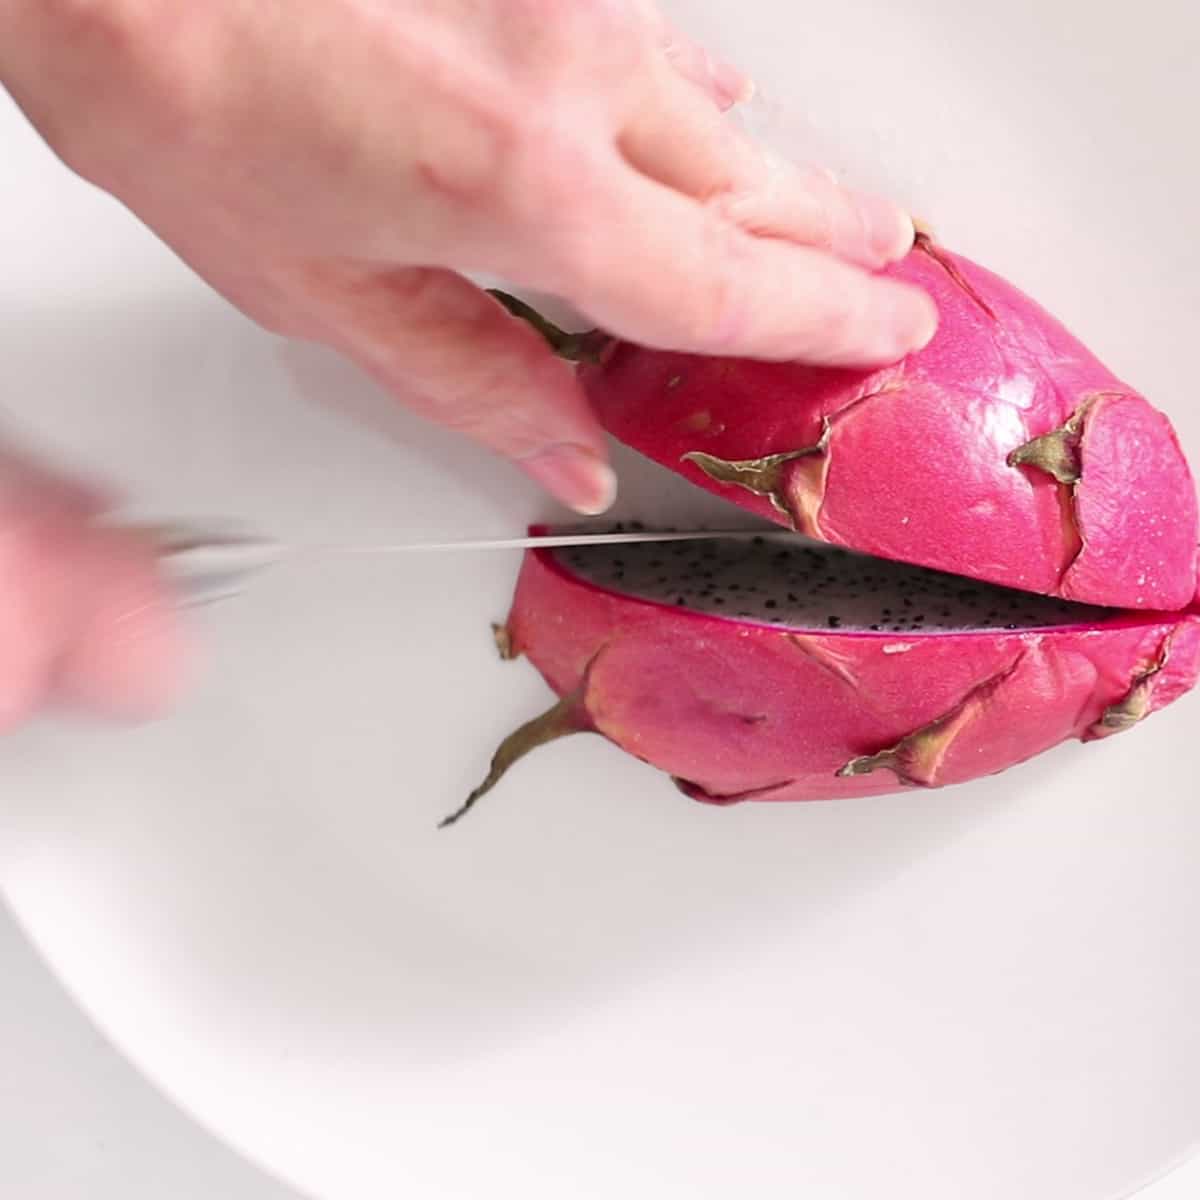 hands slicing a dragon fruit